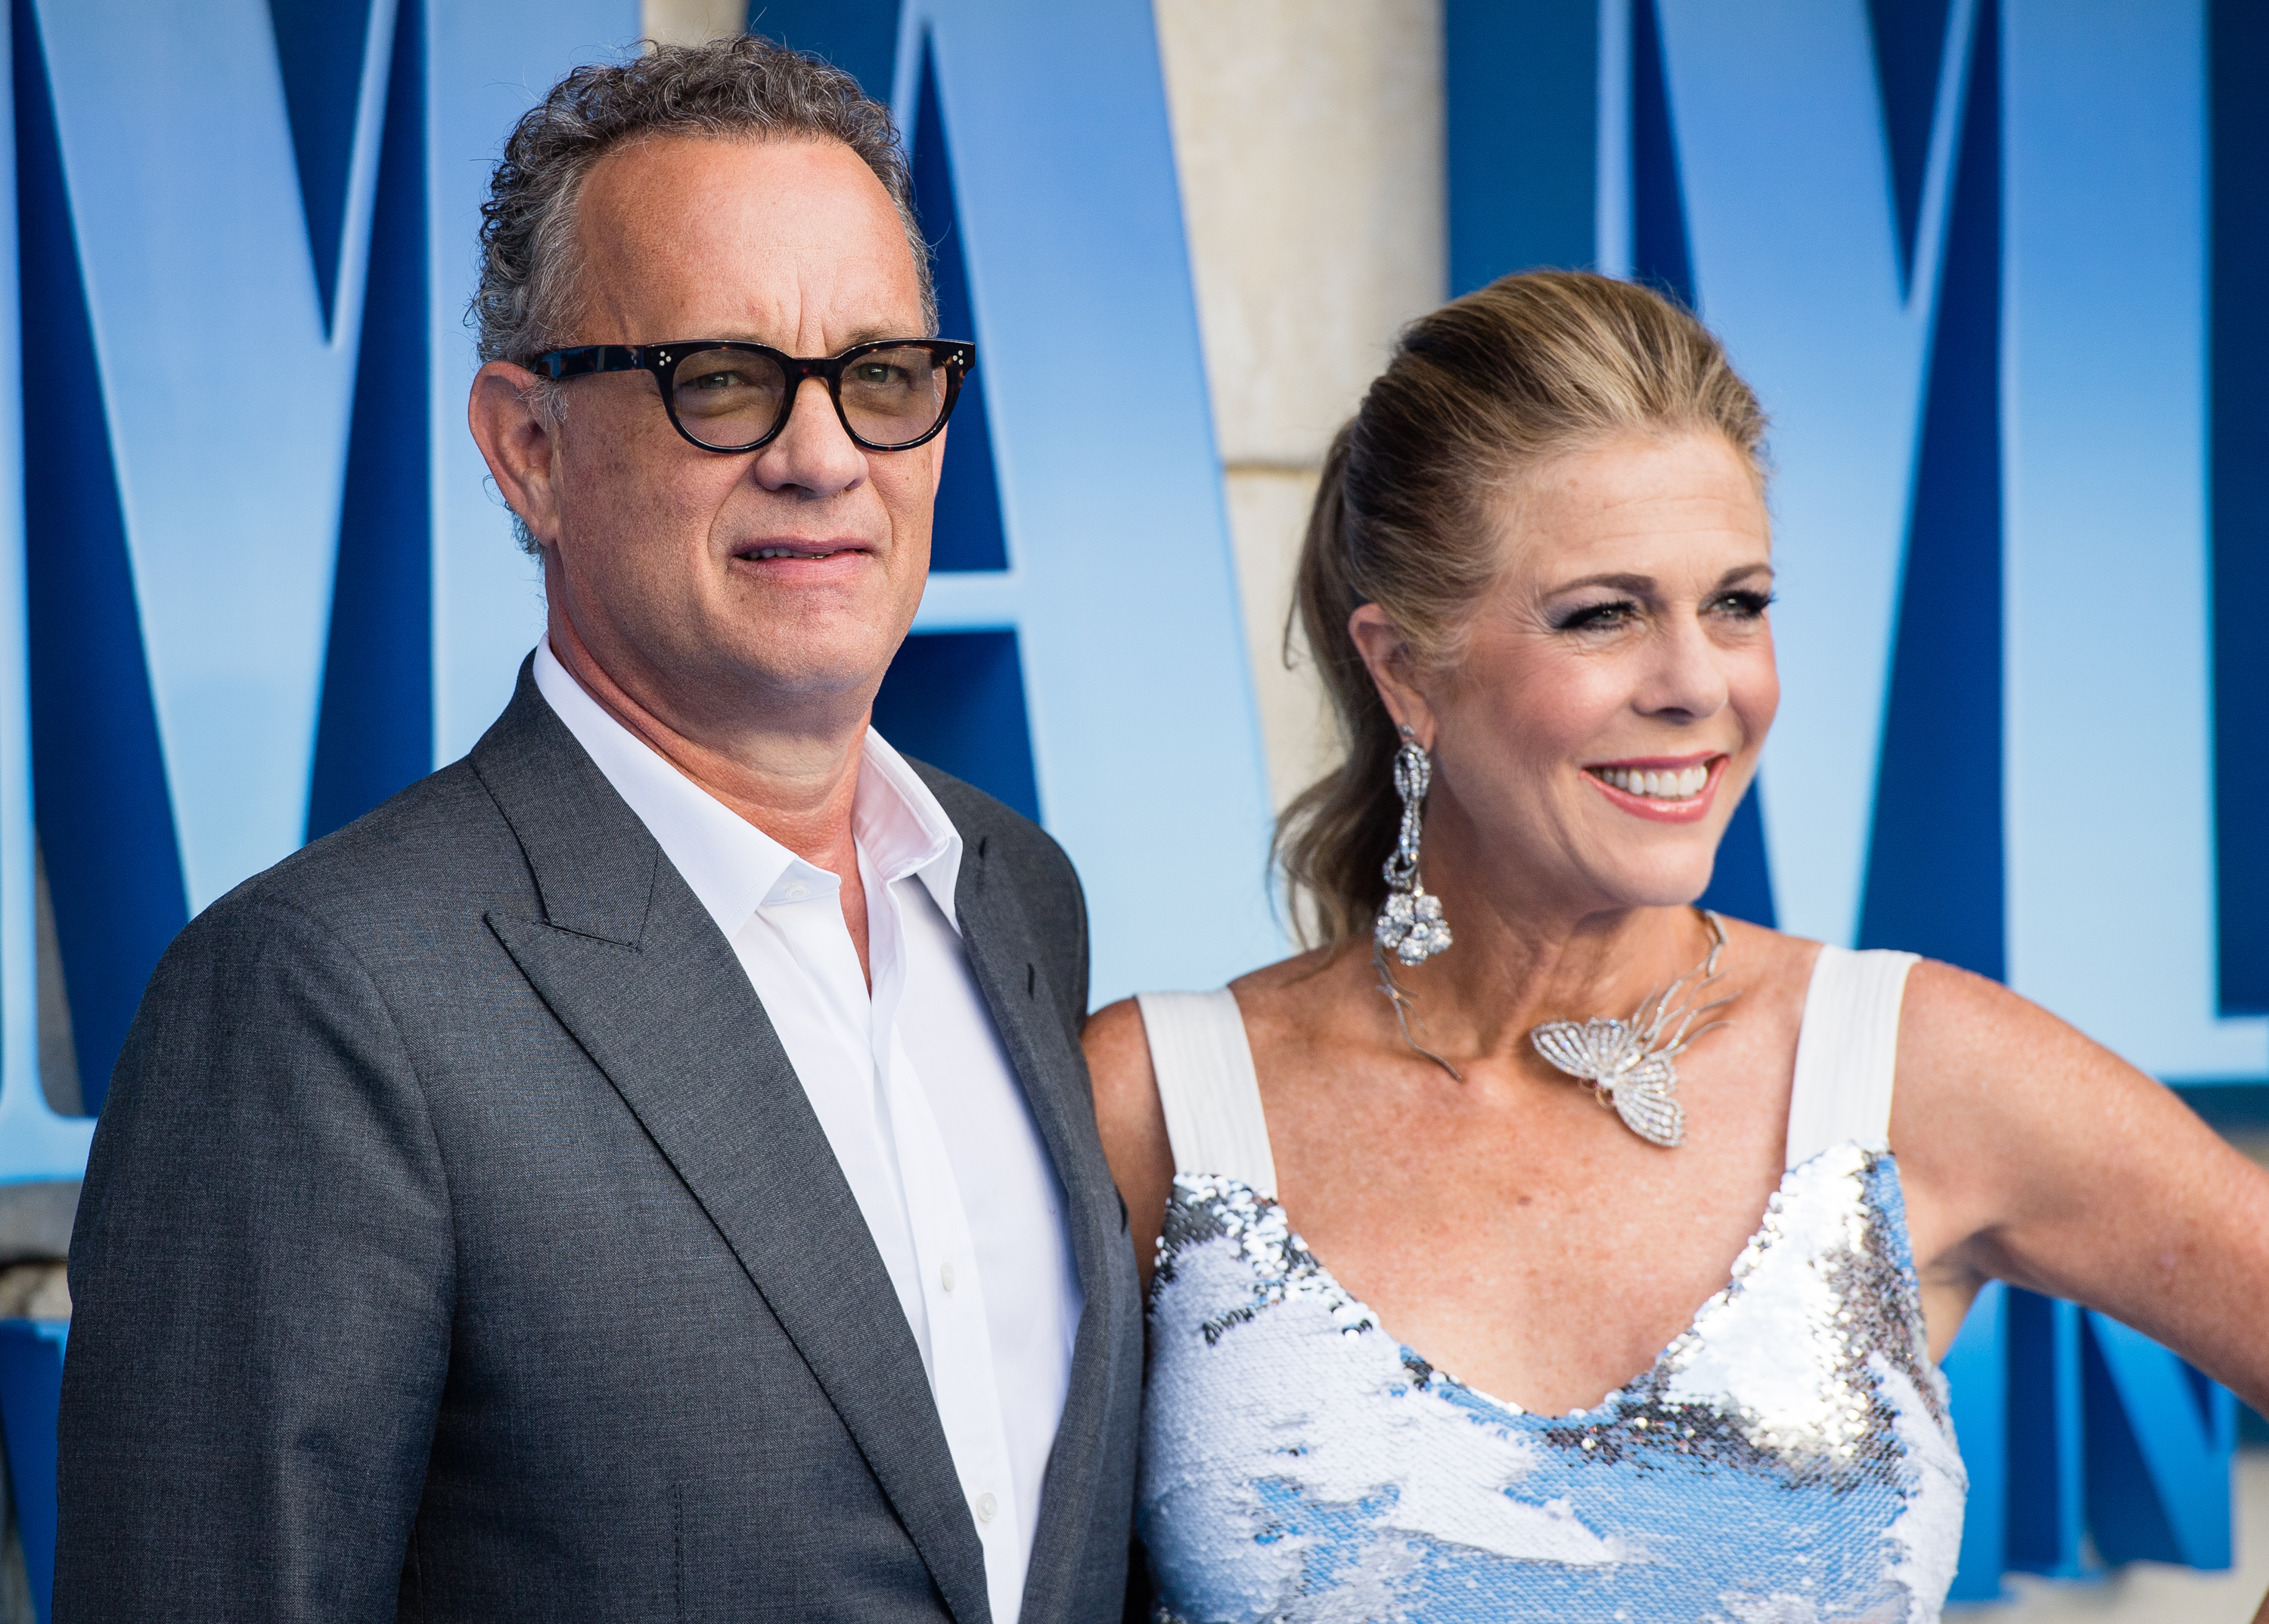 Tom Hanks and wife Rita Wilson arrive at Mamma Mia 2 premiere